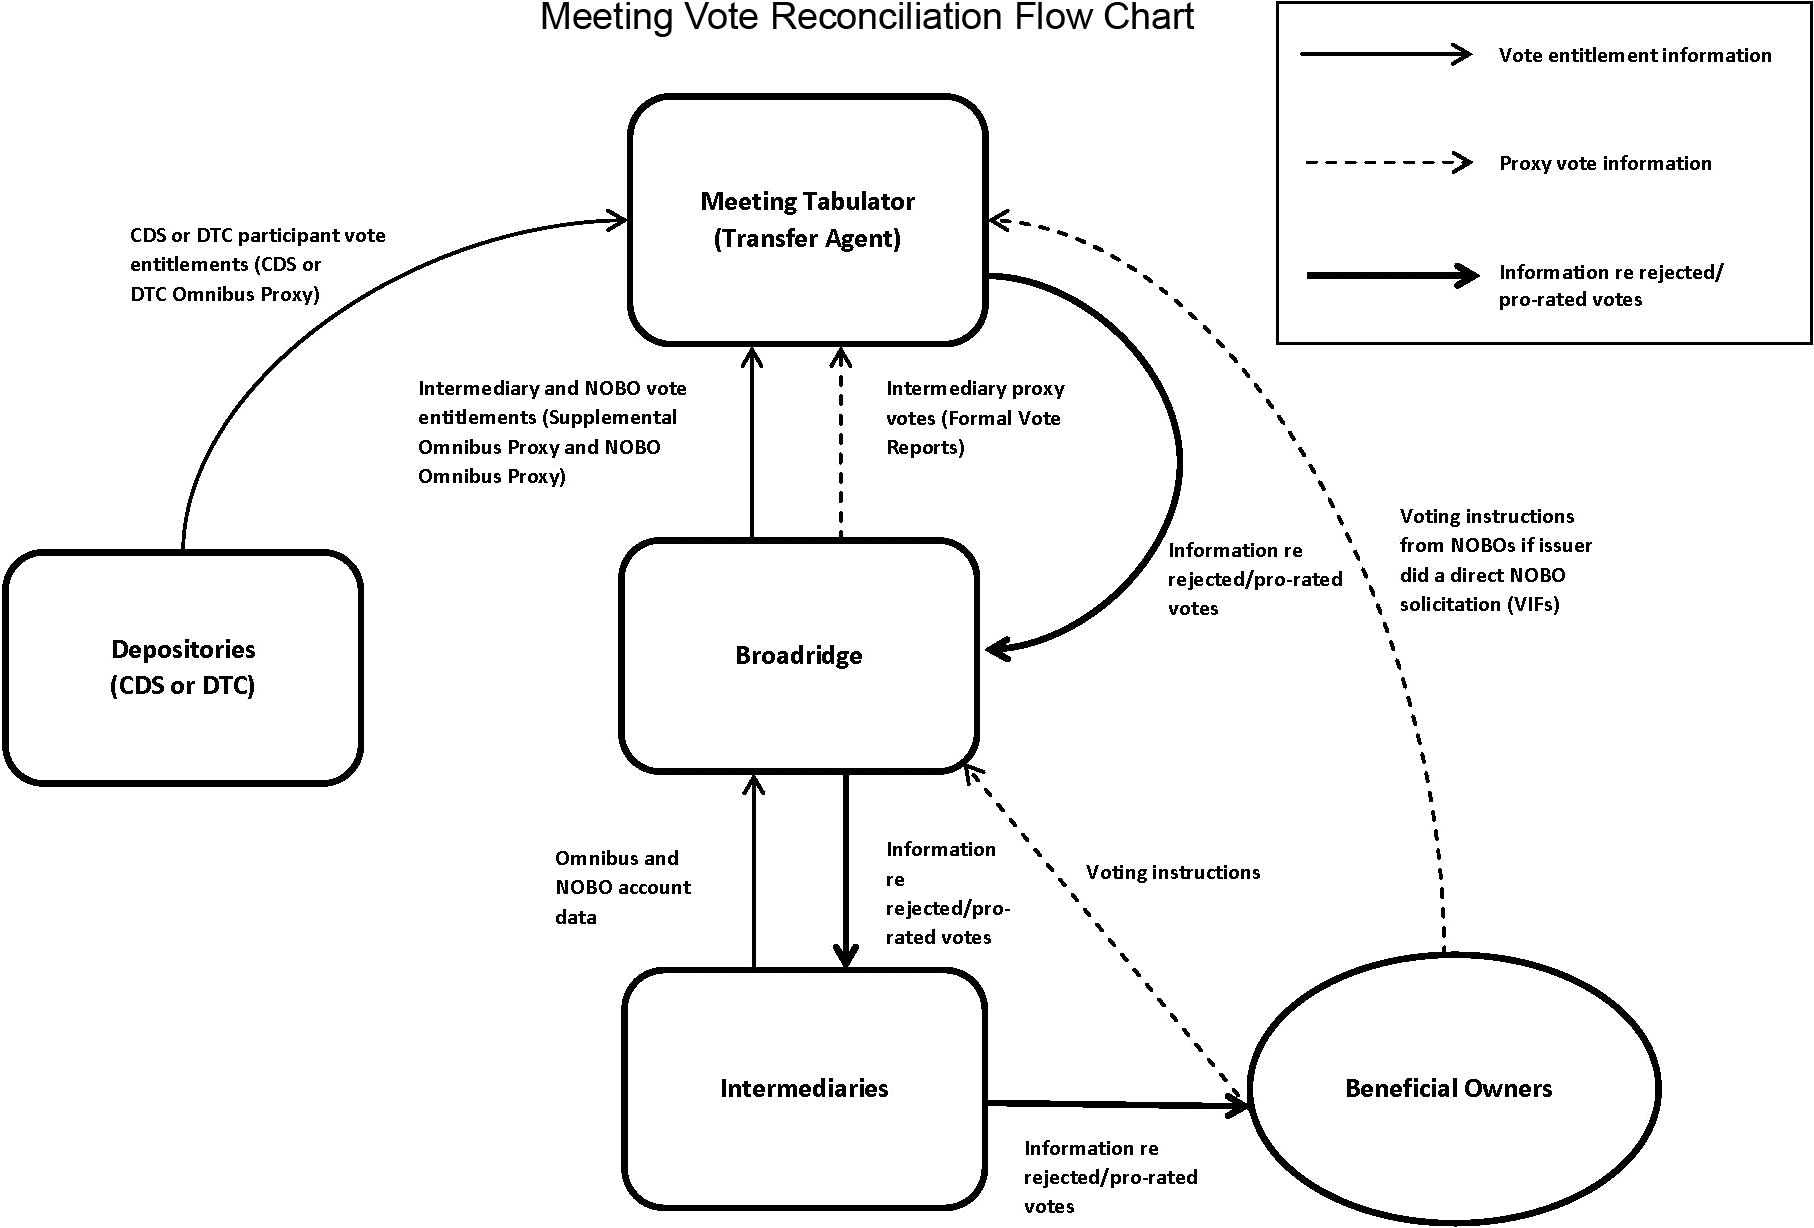 Meeting Vote Reconciliation Flow Chart